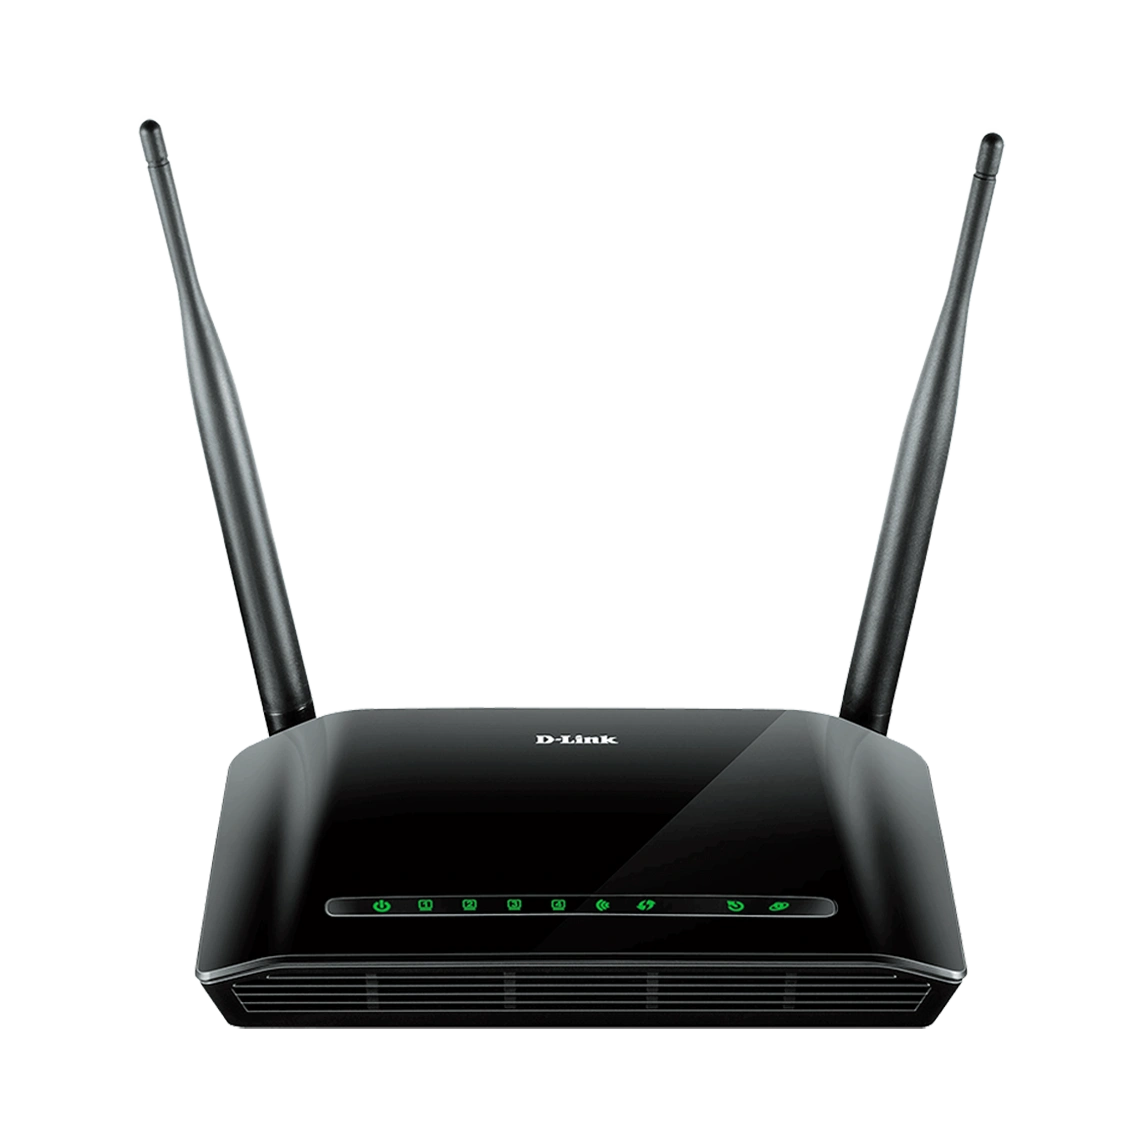 D-Link Wireless N300 ADSL2+ Router DSL-2740U